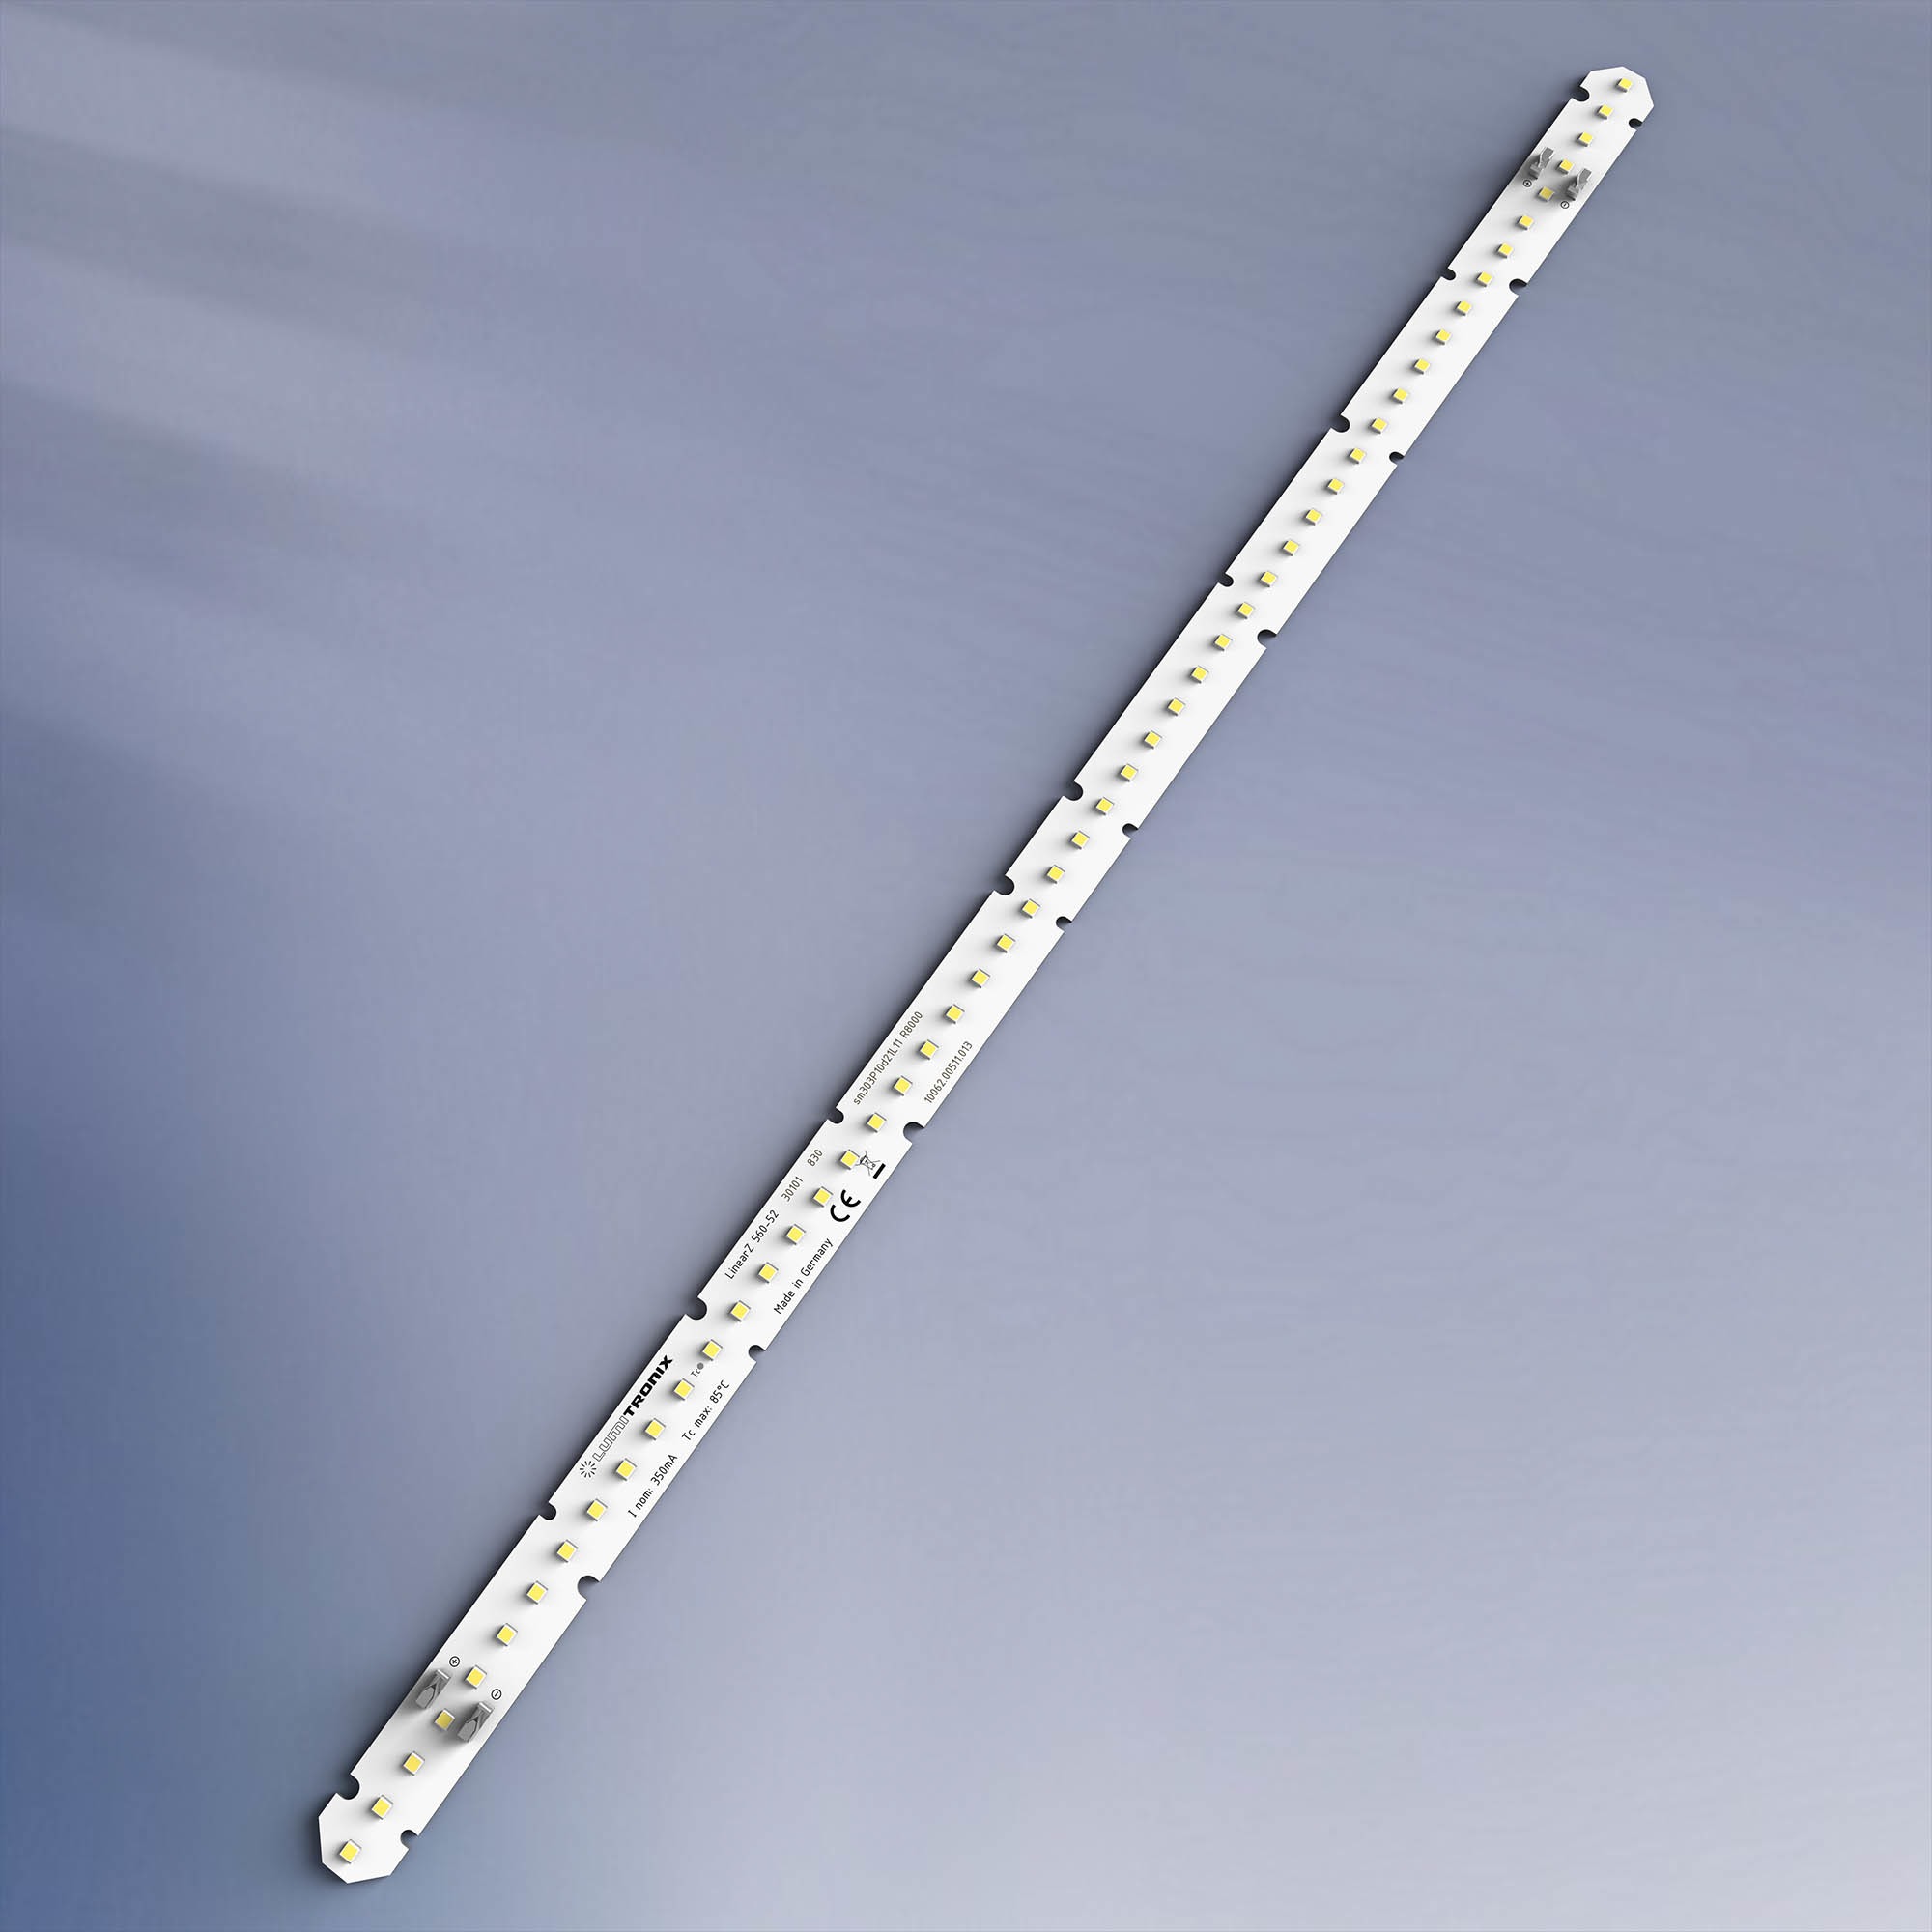 LumiBar-52-3098+ Toshiba-SSC LED Strip Sunlike CRI98 warm white 3500K 1345lm 350mA 39.6V 52 LEDs 22.05in/56cm module (732lm/ft 7.6W/ft)